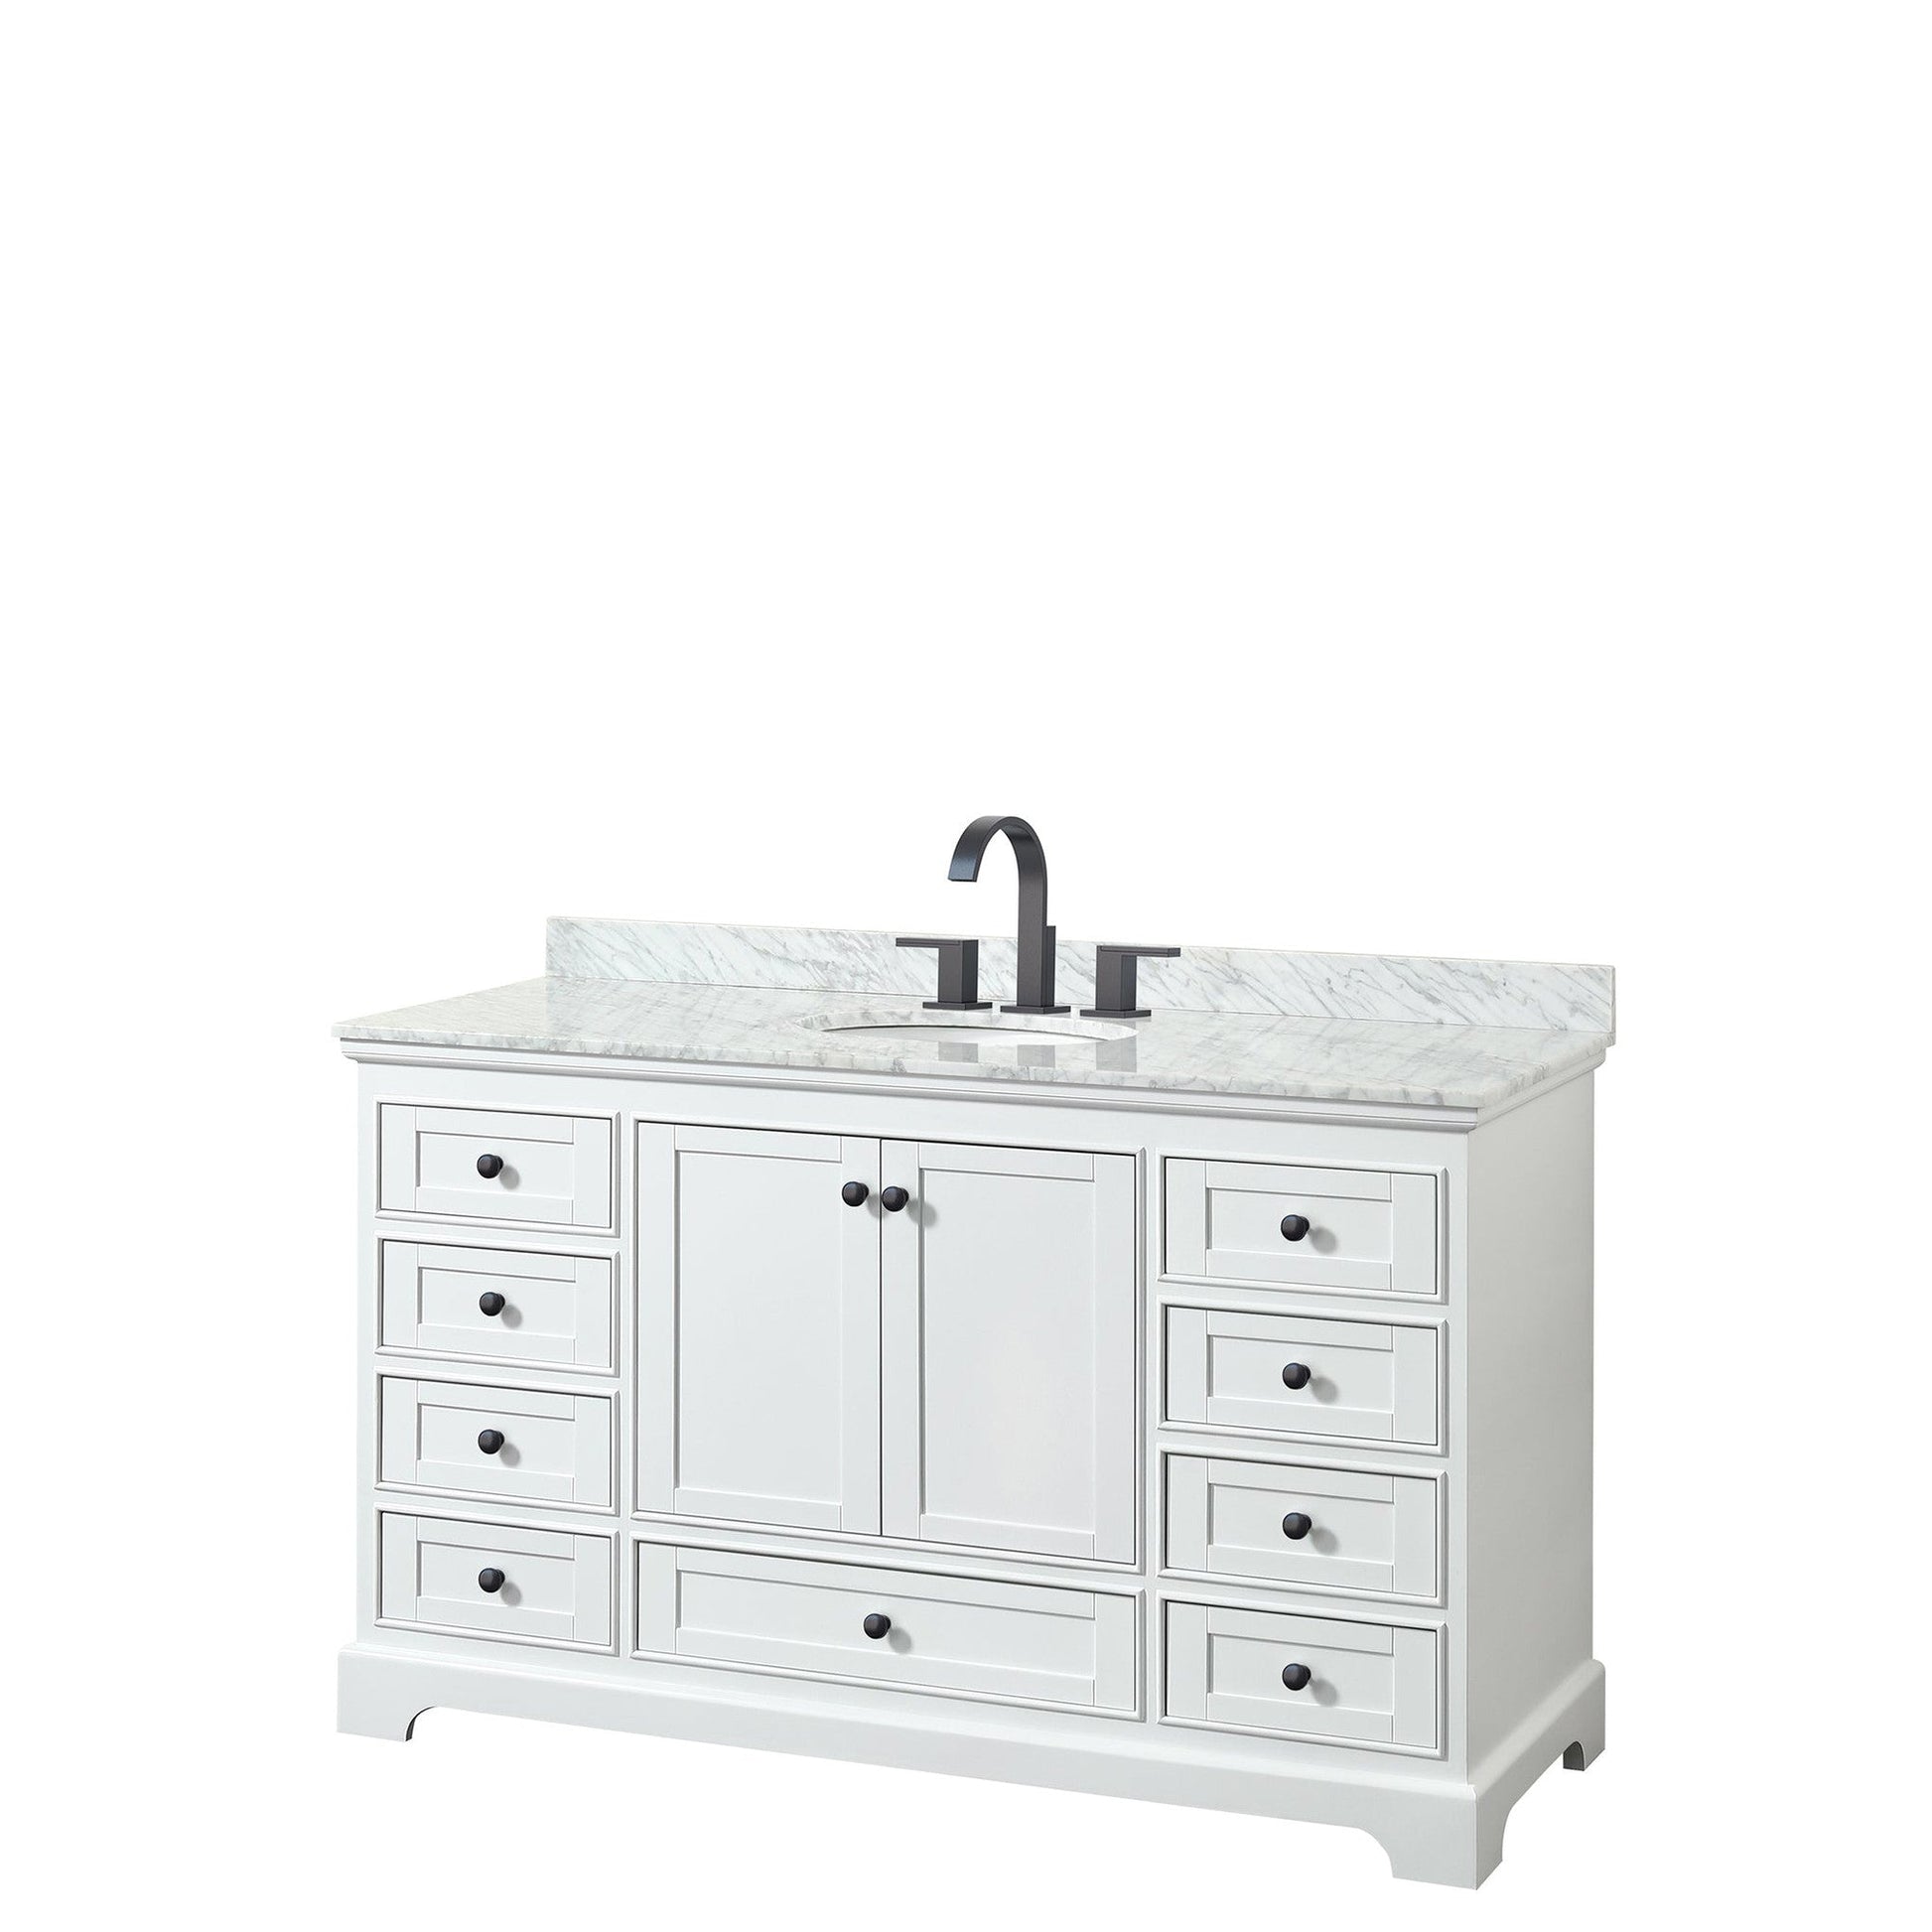 Deborah 60" Single Bathroom Vanity in White, White Carrara Marble Countertop, Undermount Oval Sink, Matte Black Trim